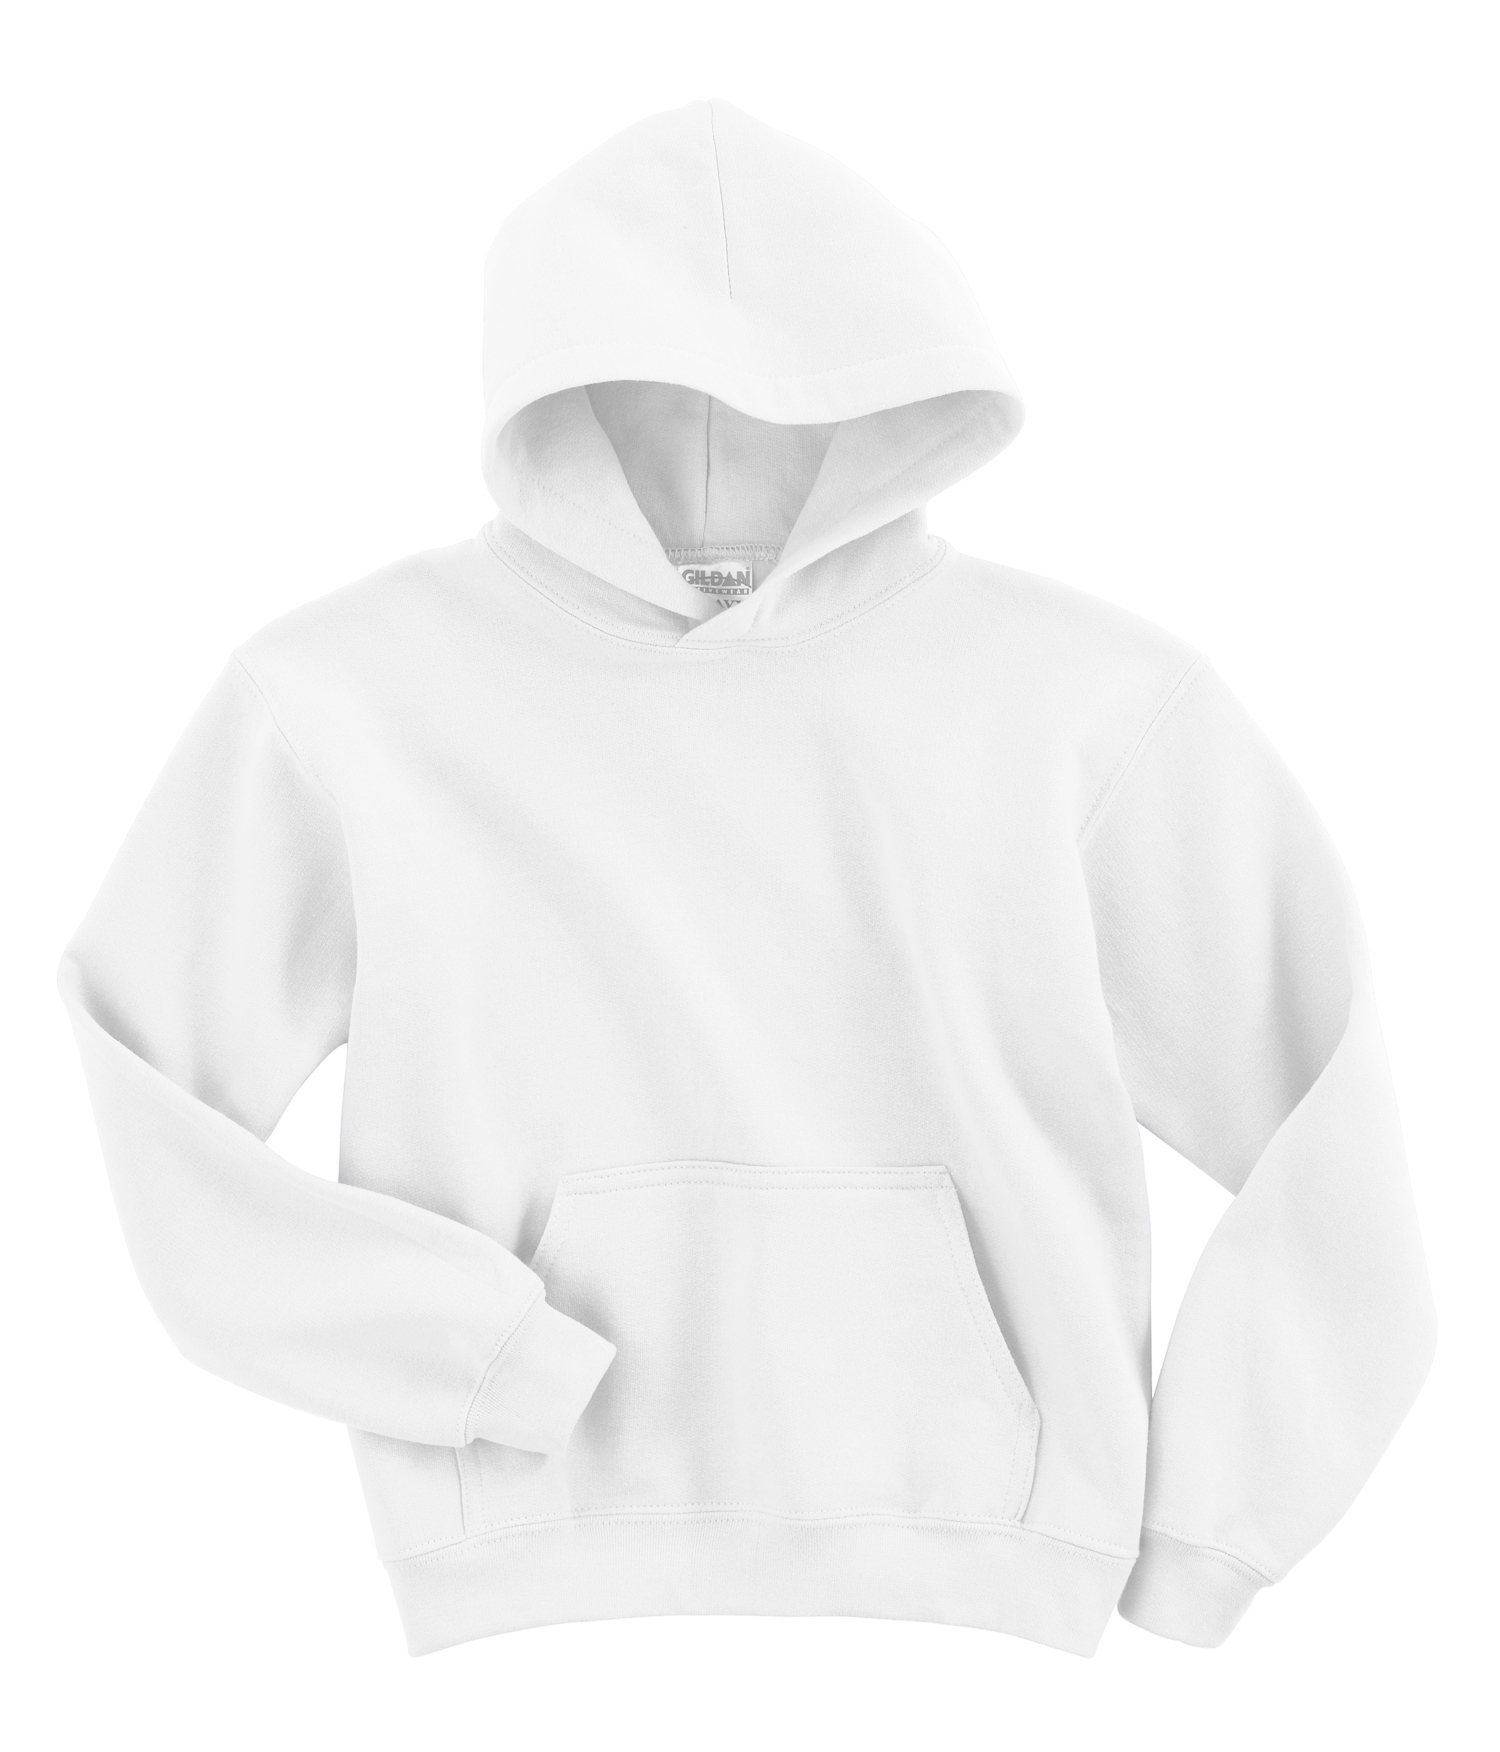 Gildan G18500B Youth 7.75 oz. Heavy Blend50/50 Hood $10.84 - Sweatshirts